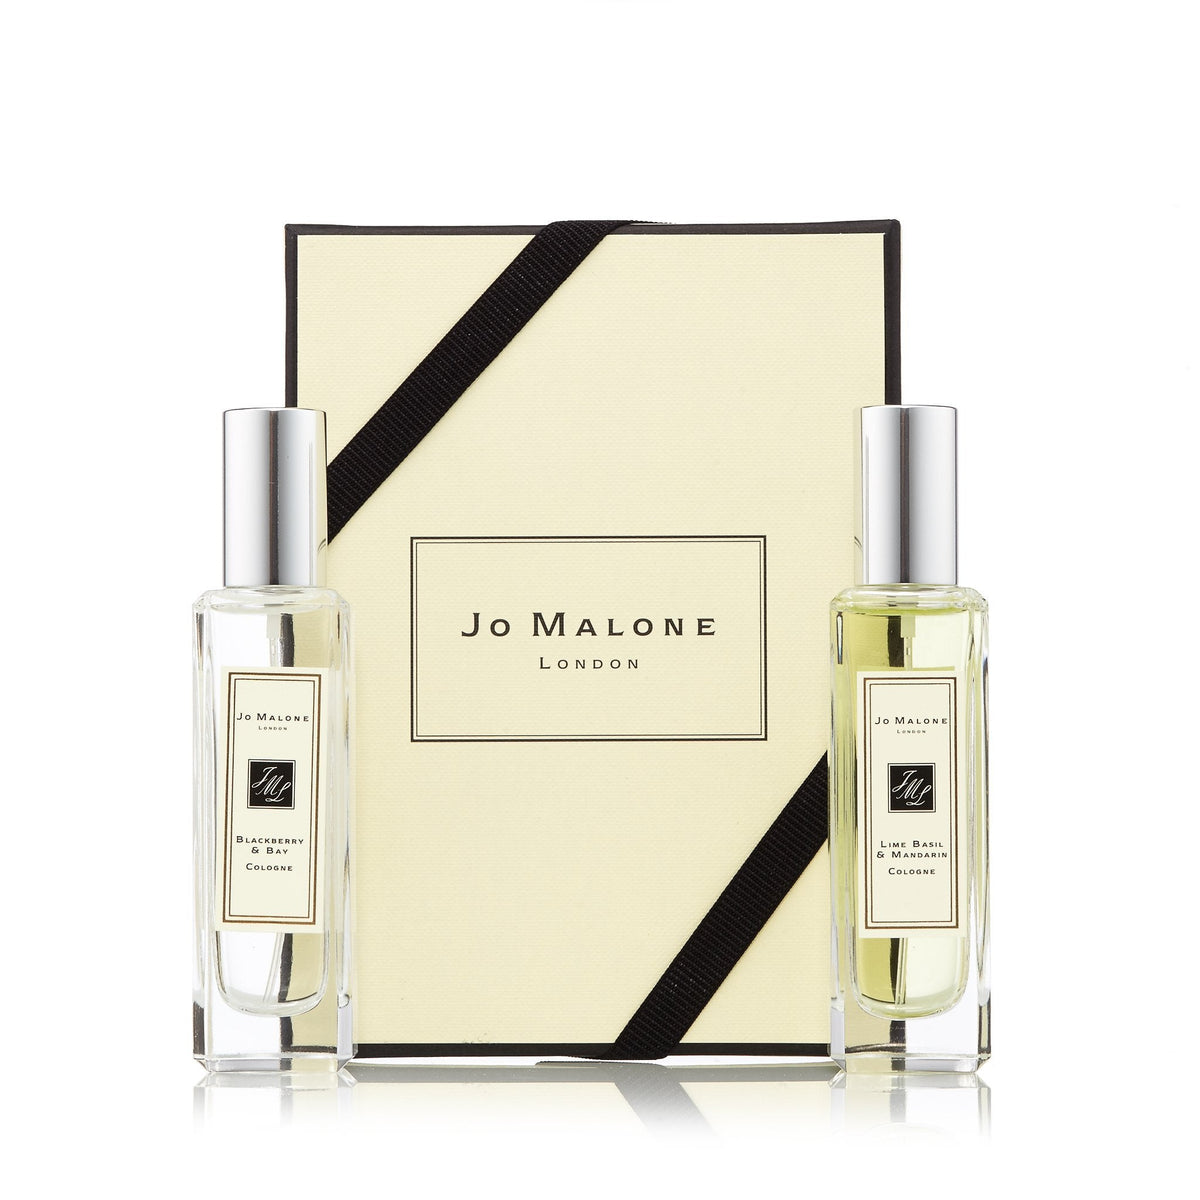 Lime Basil & Mandarin and Blackberry & Bay Gift Set by Jo Malone 1.0 oz. Each